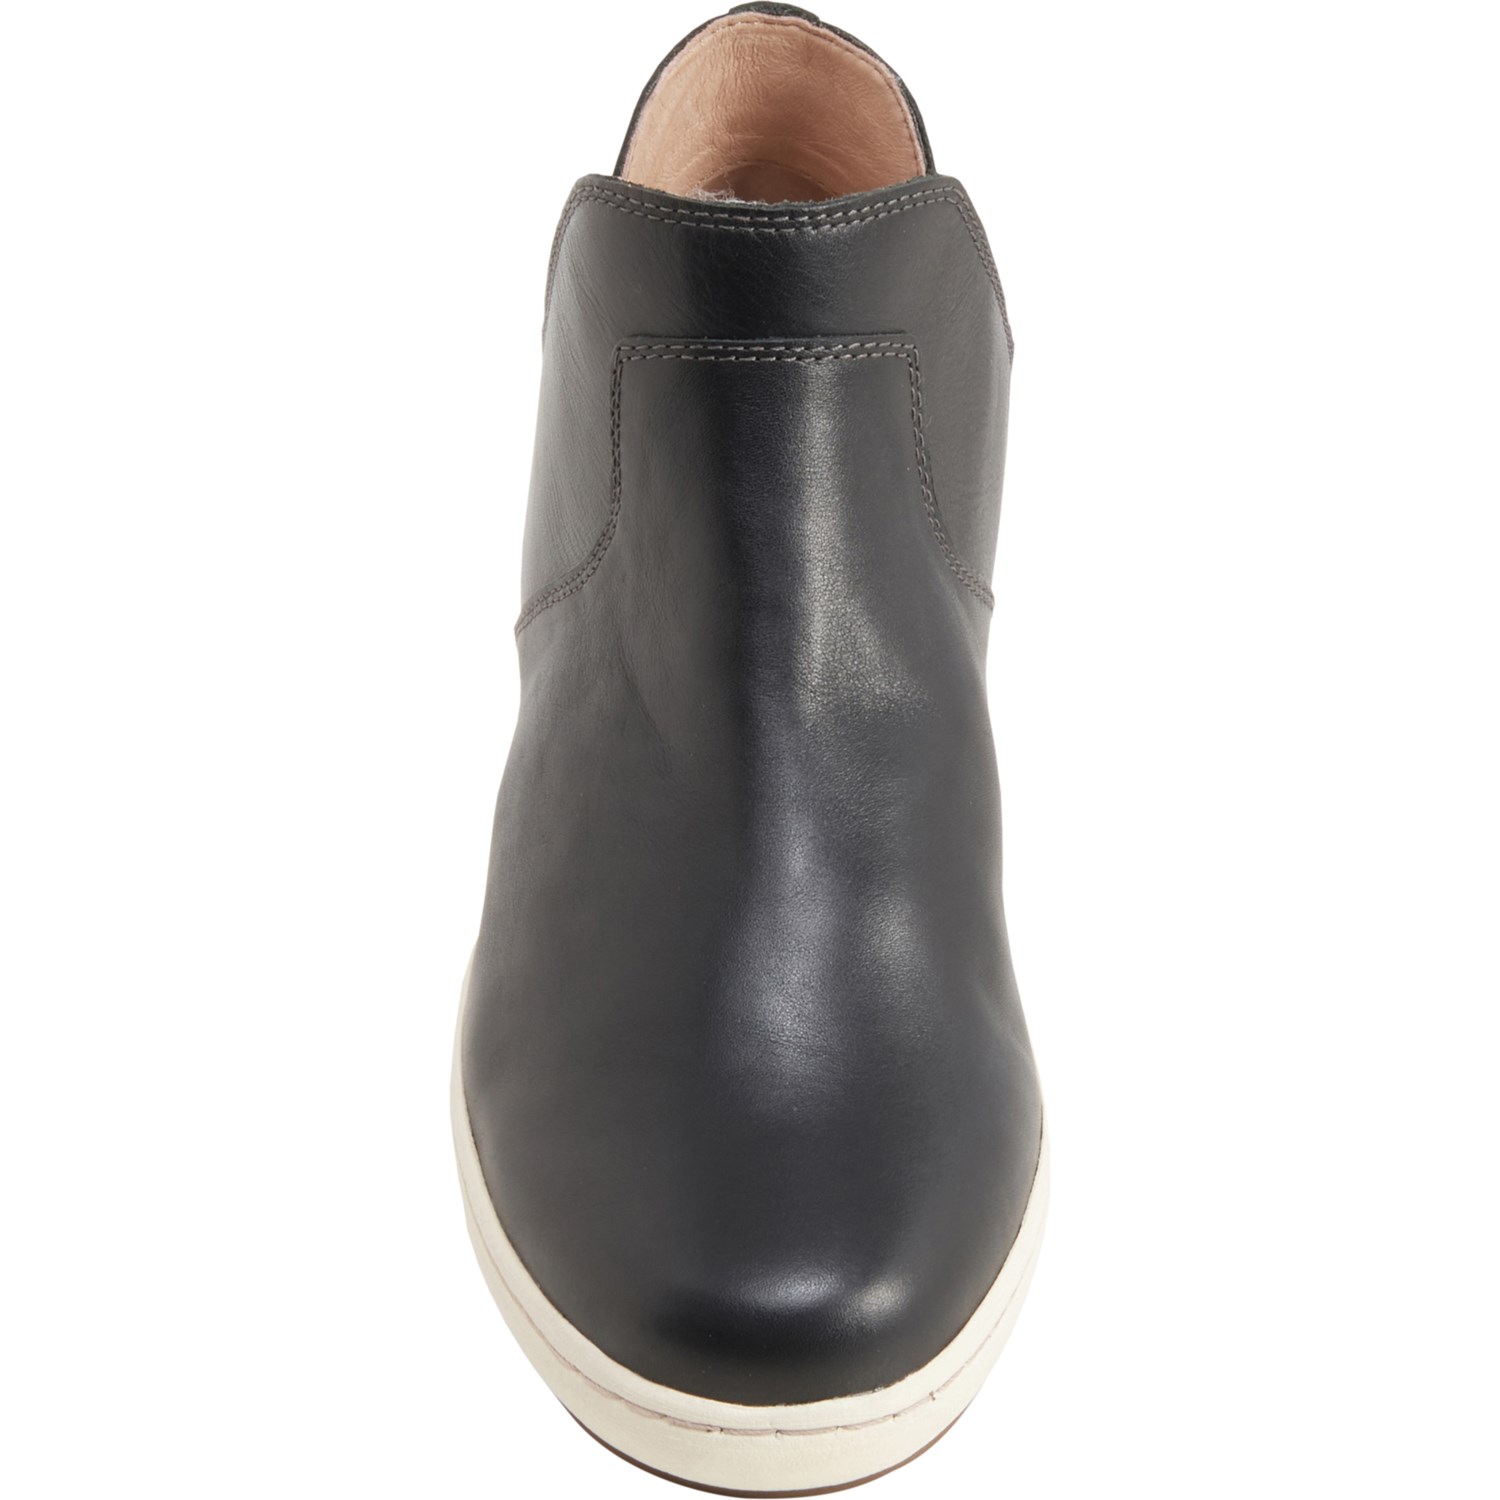 Taos Footwear Unity Sneaker Boots (For Women) - Save 49%